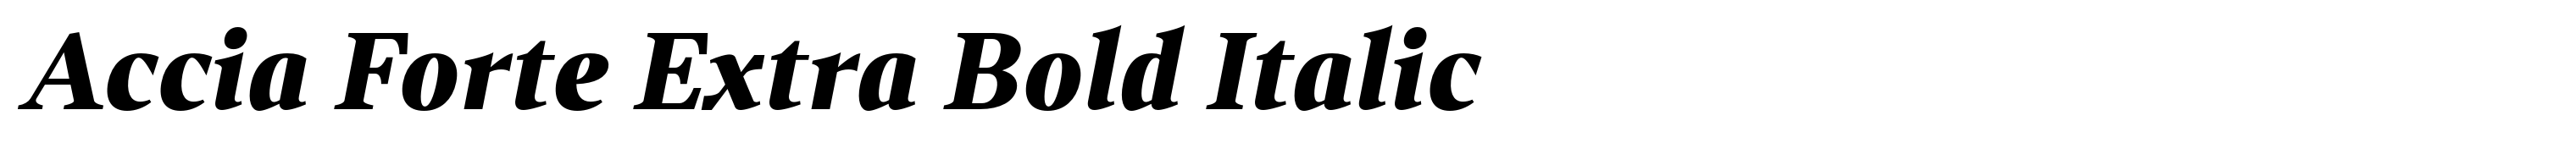 Accia Forte Extra Bold Italic